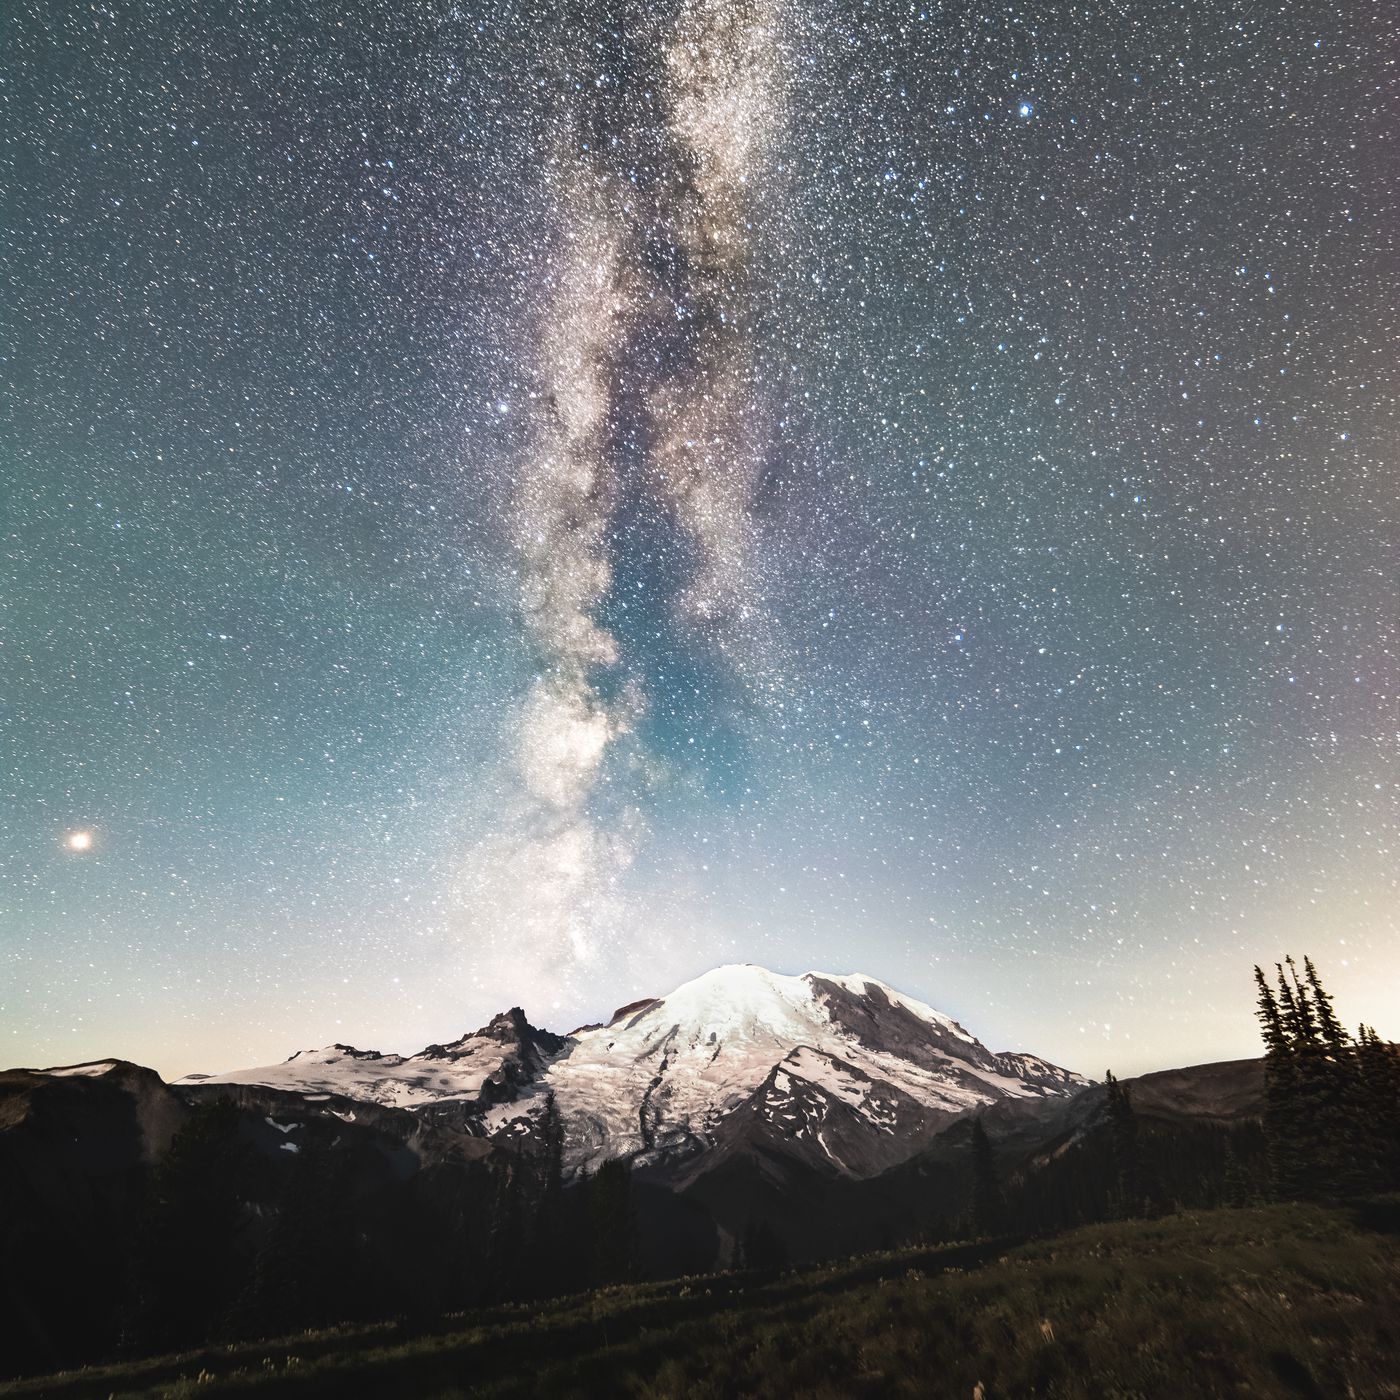 Where to go stargazing near Seattle